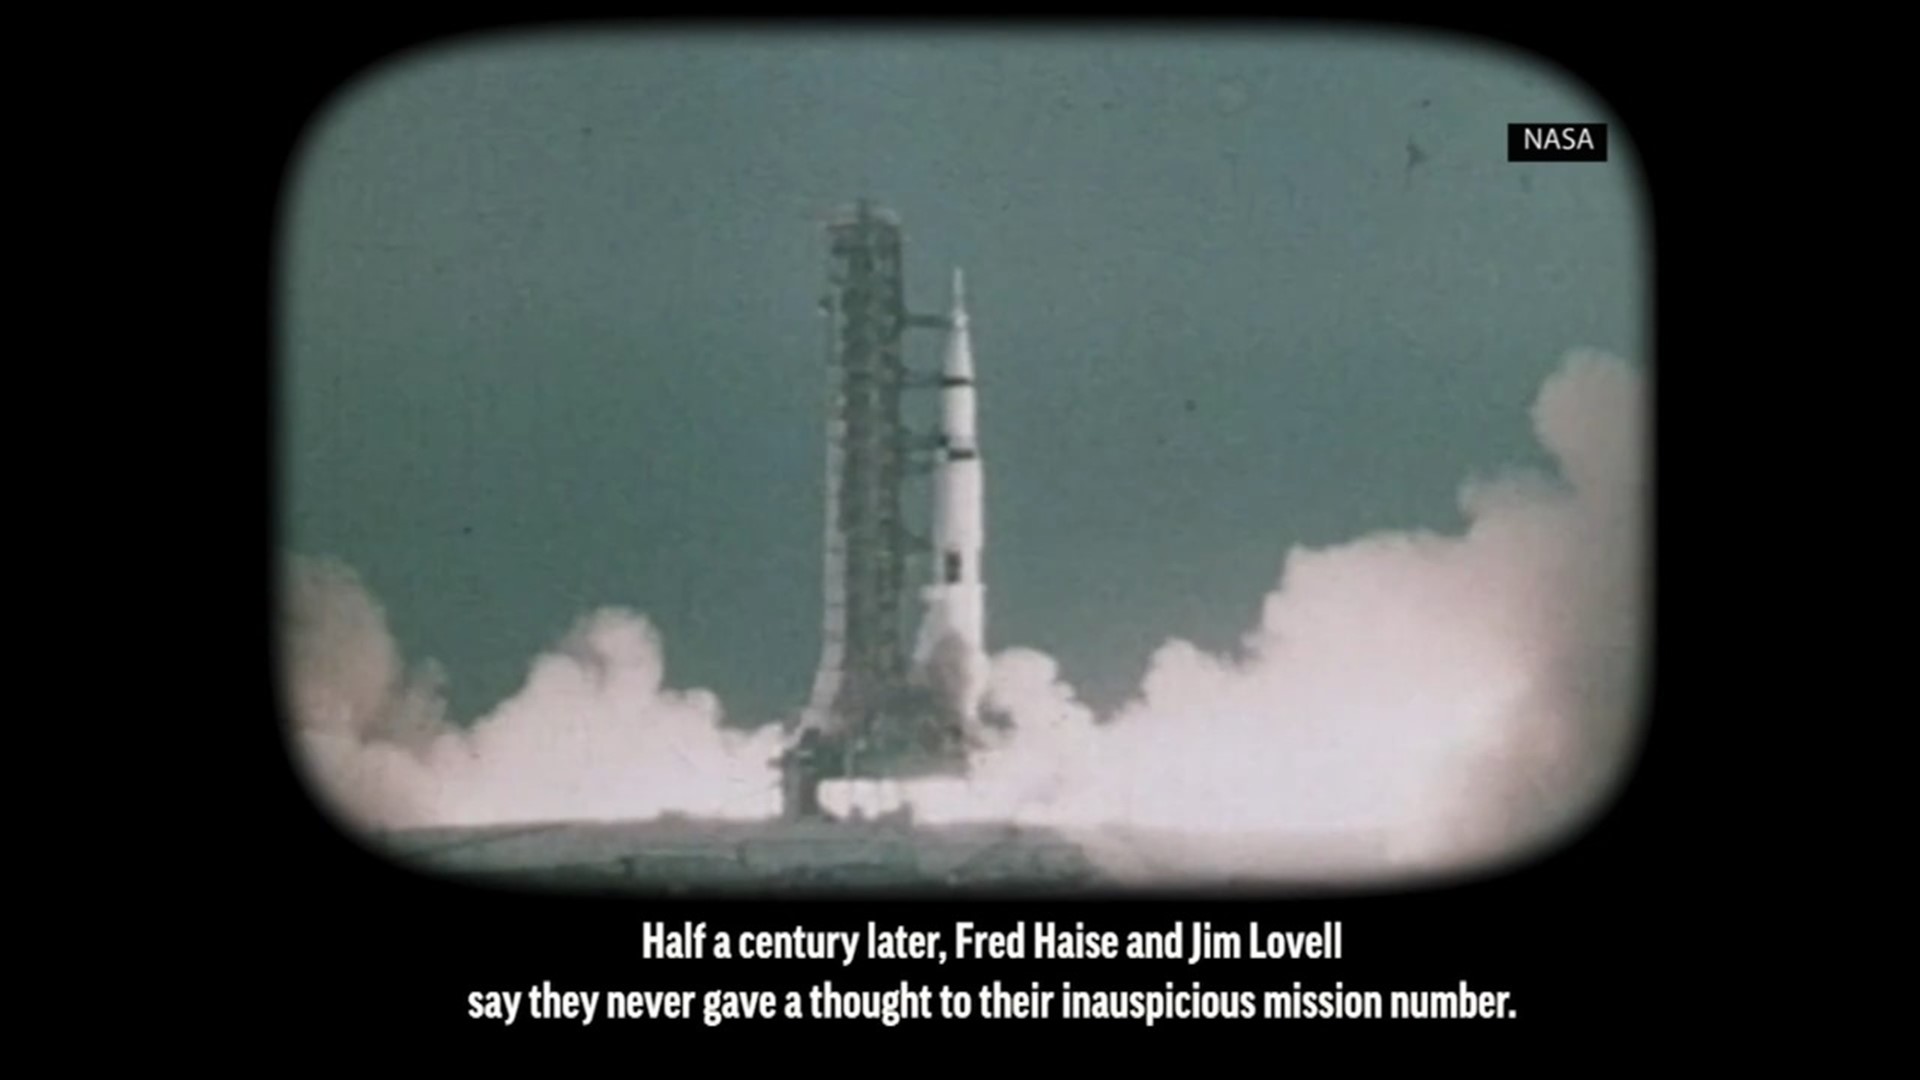 Houston Weve Had A Problem Apollo 13 Marks 50th Anniversary